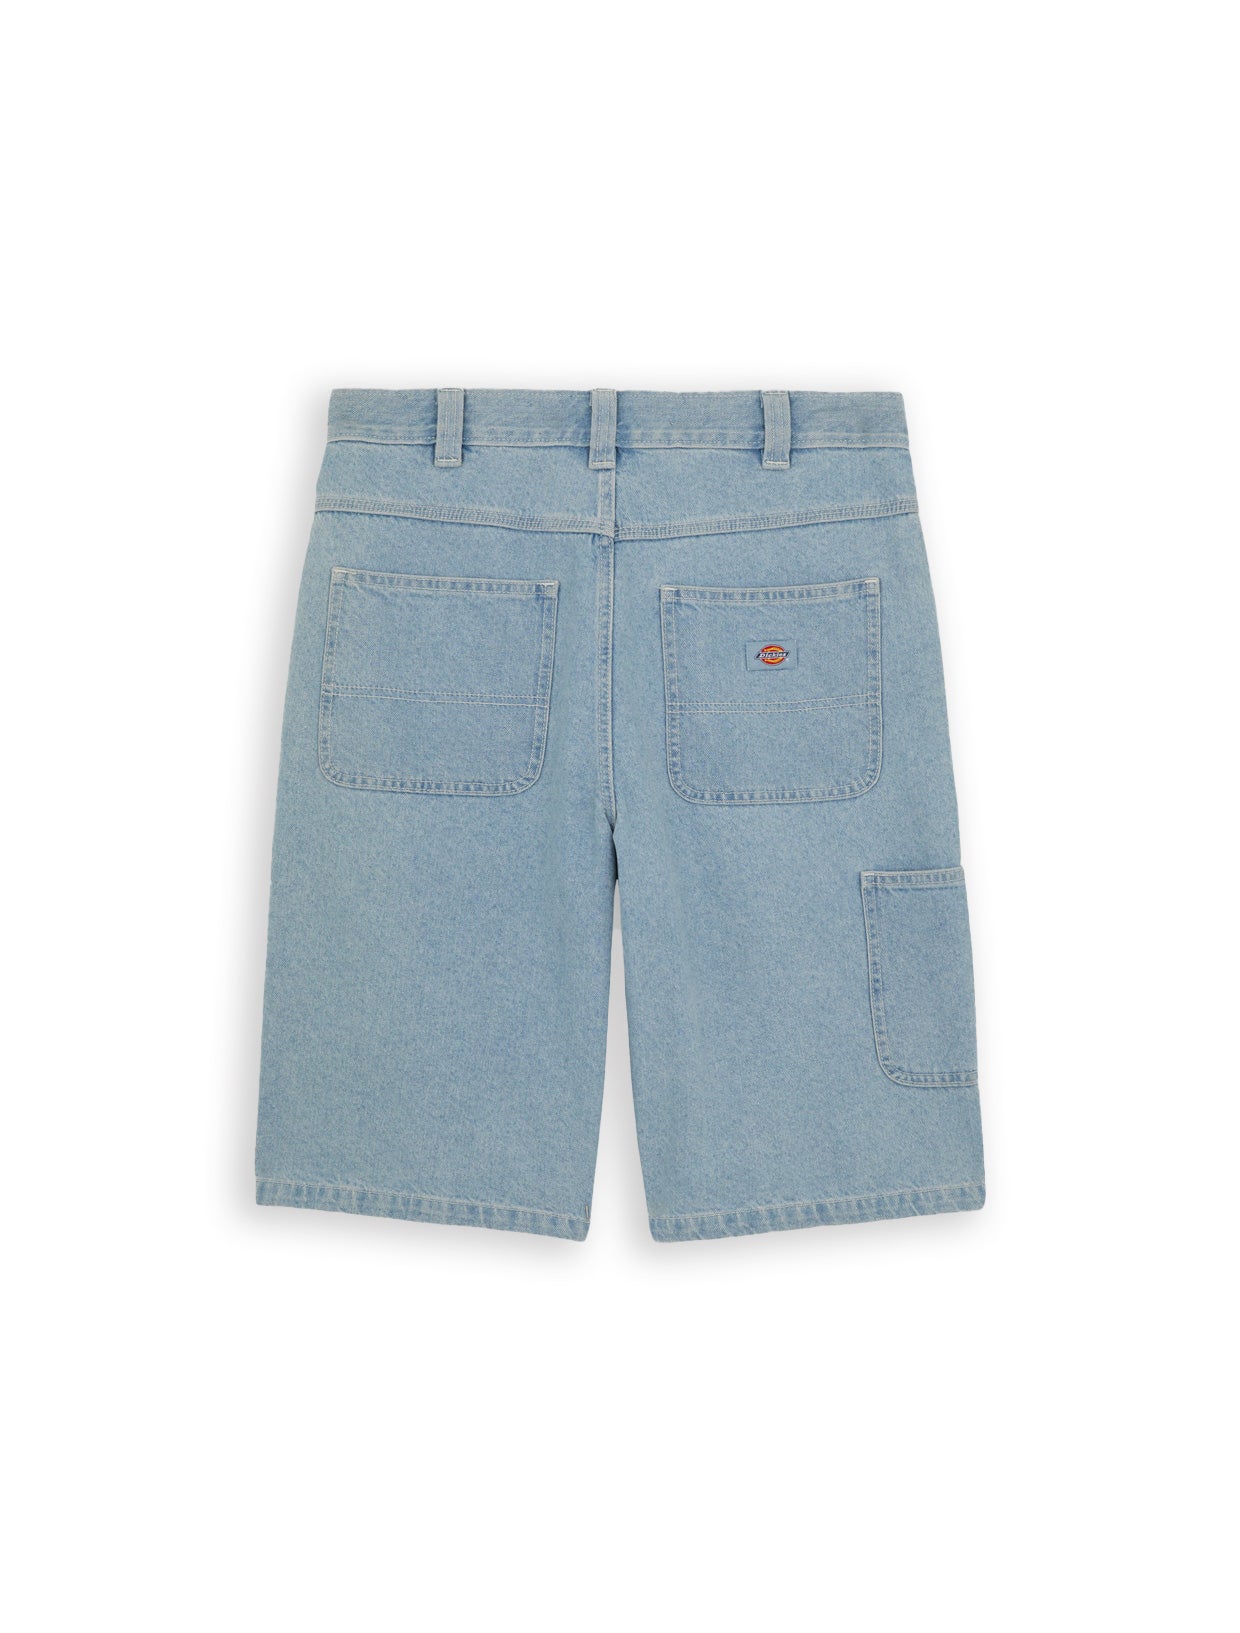 Dickies Madison Denim Short Pants Vintage Aged Blue